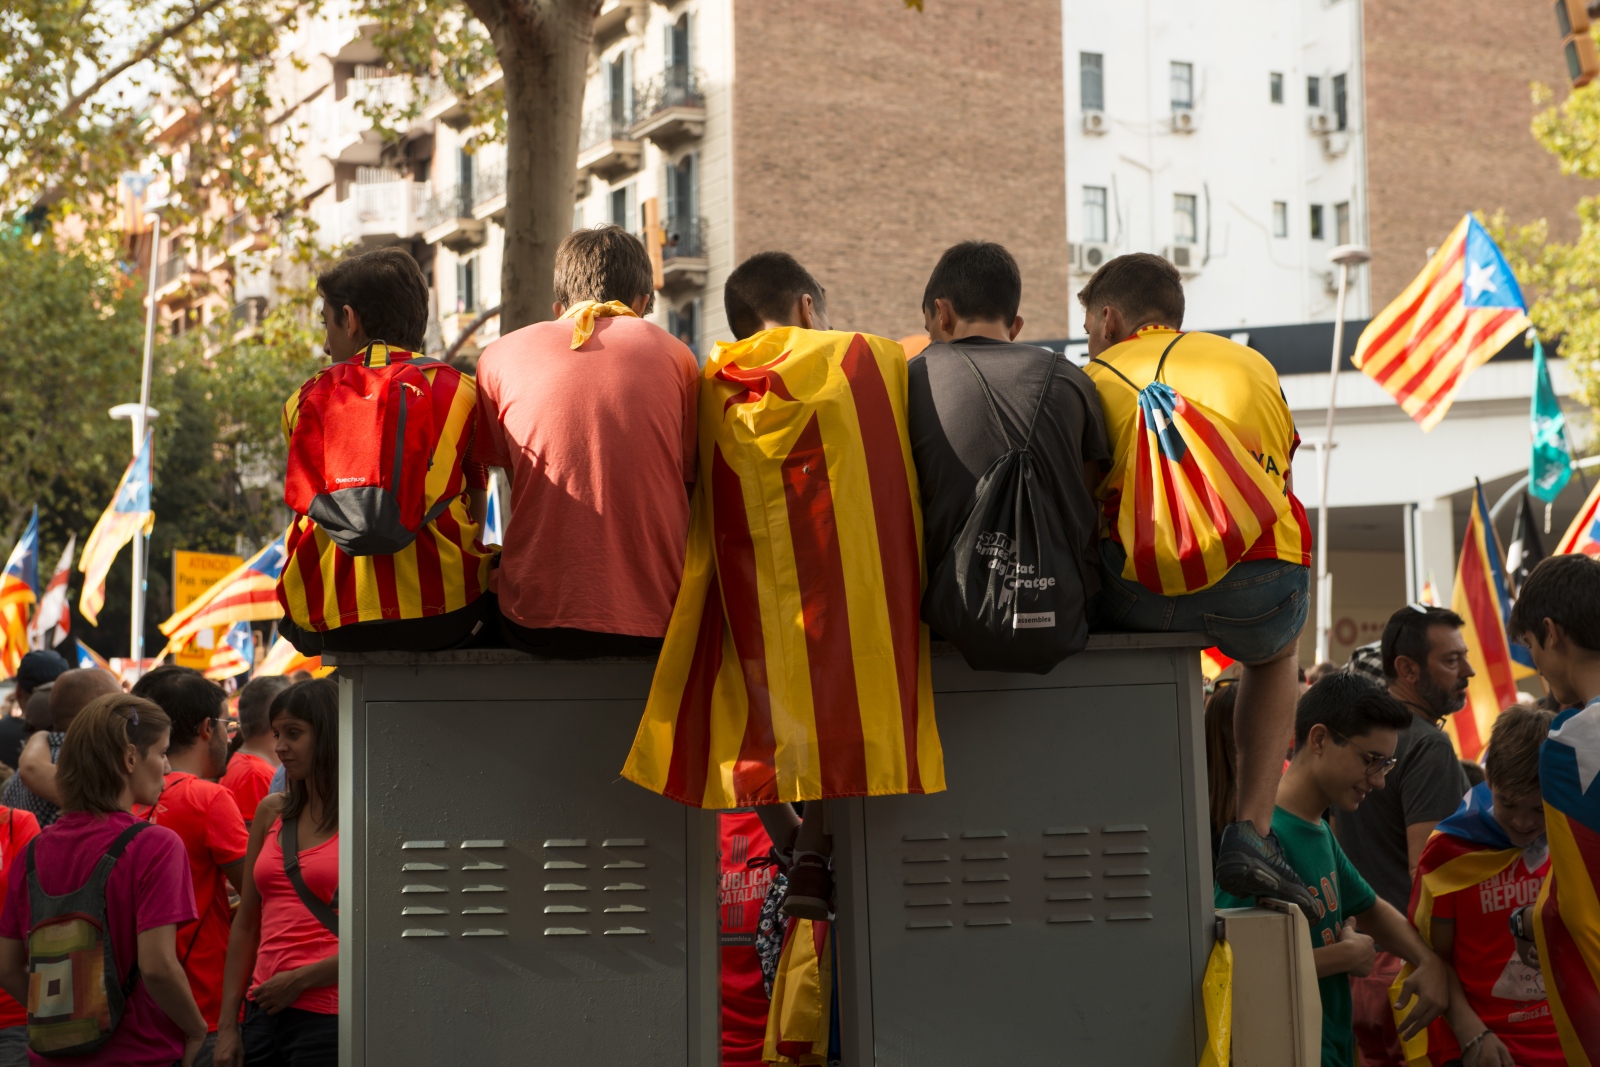 09.11.18 Over 1 million Catalu&a_e release of political prisoners